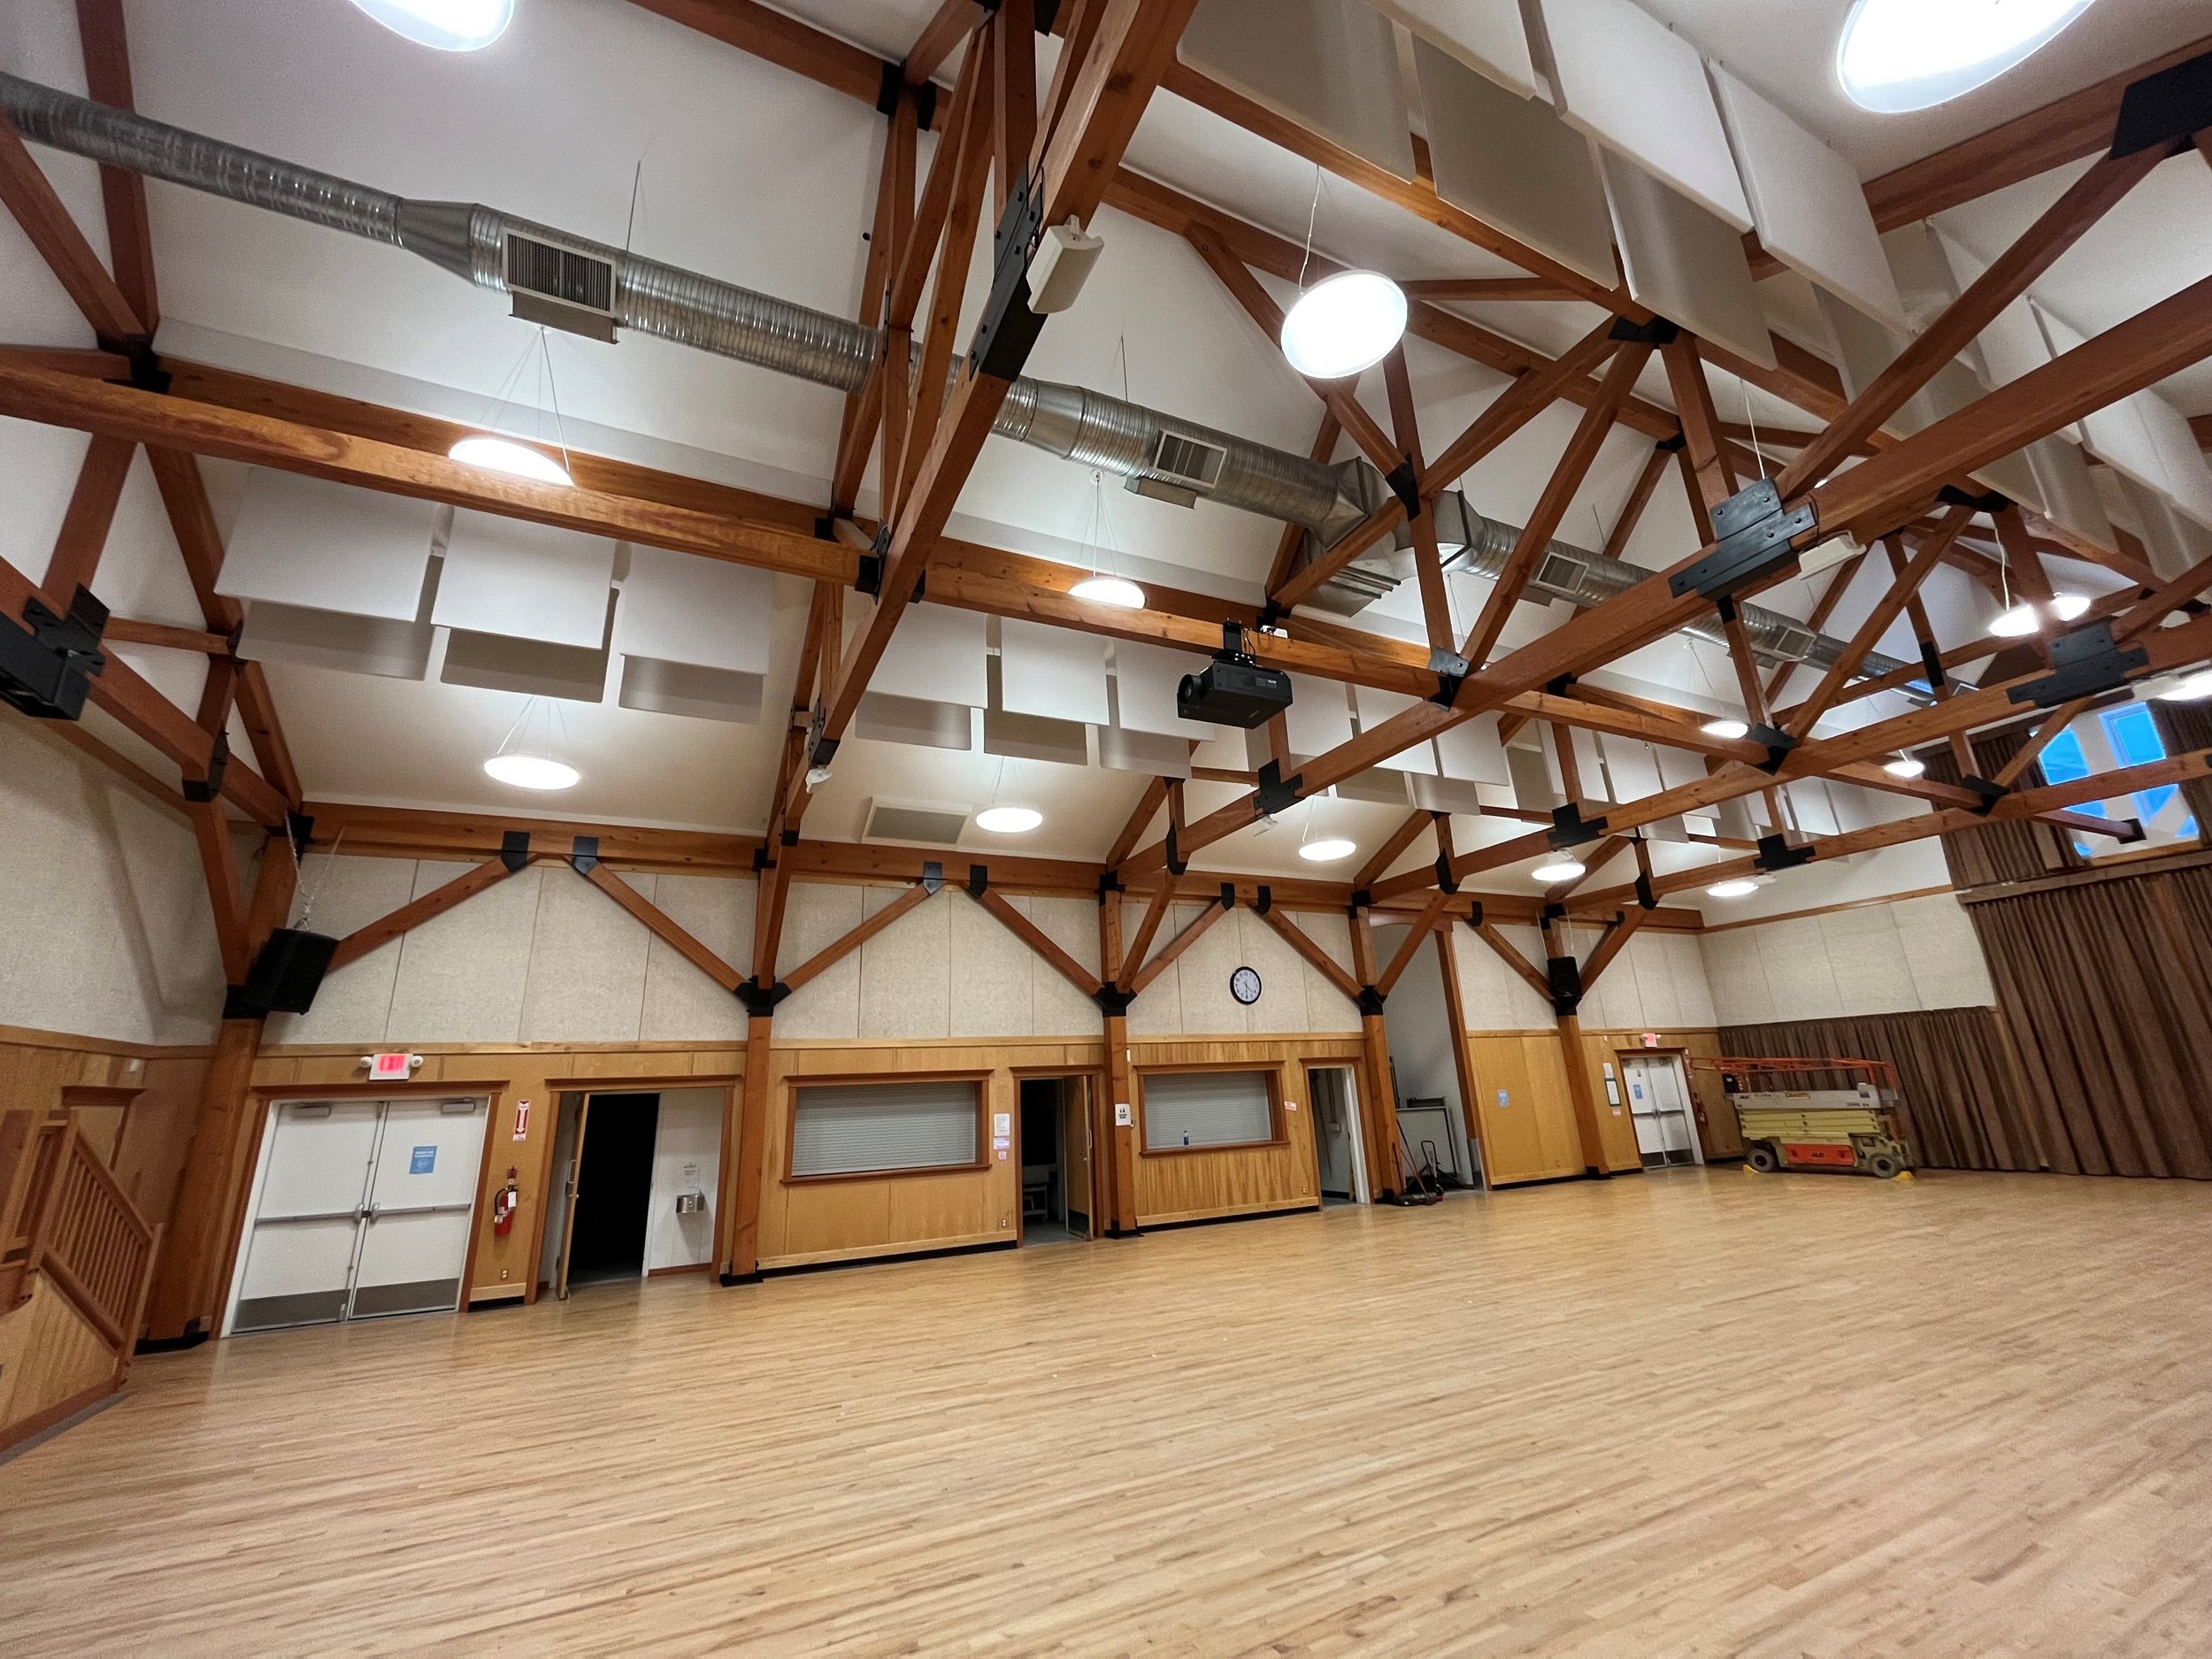 Echotrol Acoustic Baffles installed in McBride Community Hall - McBride, BC 3.jpg